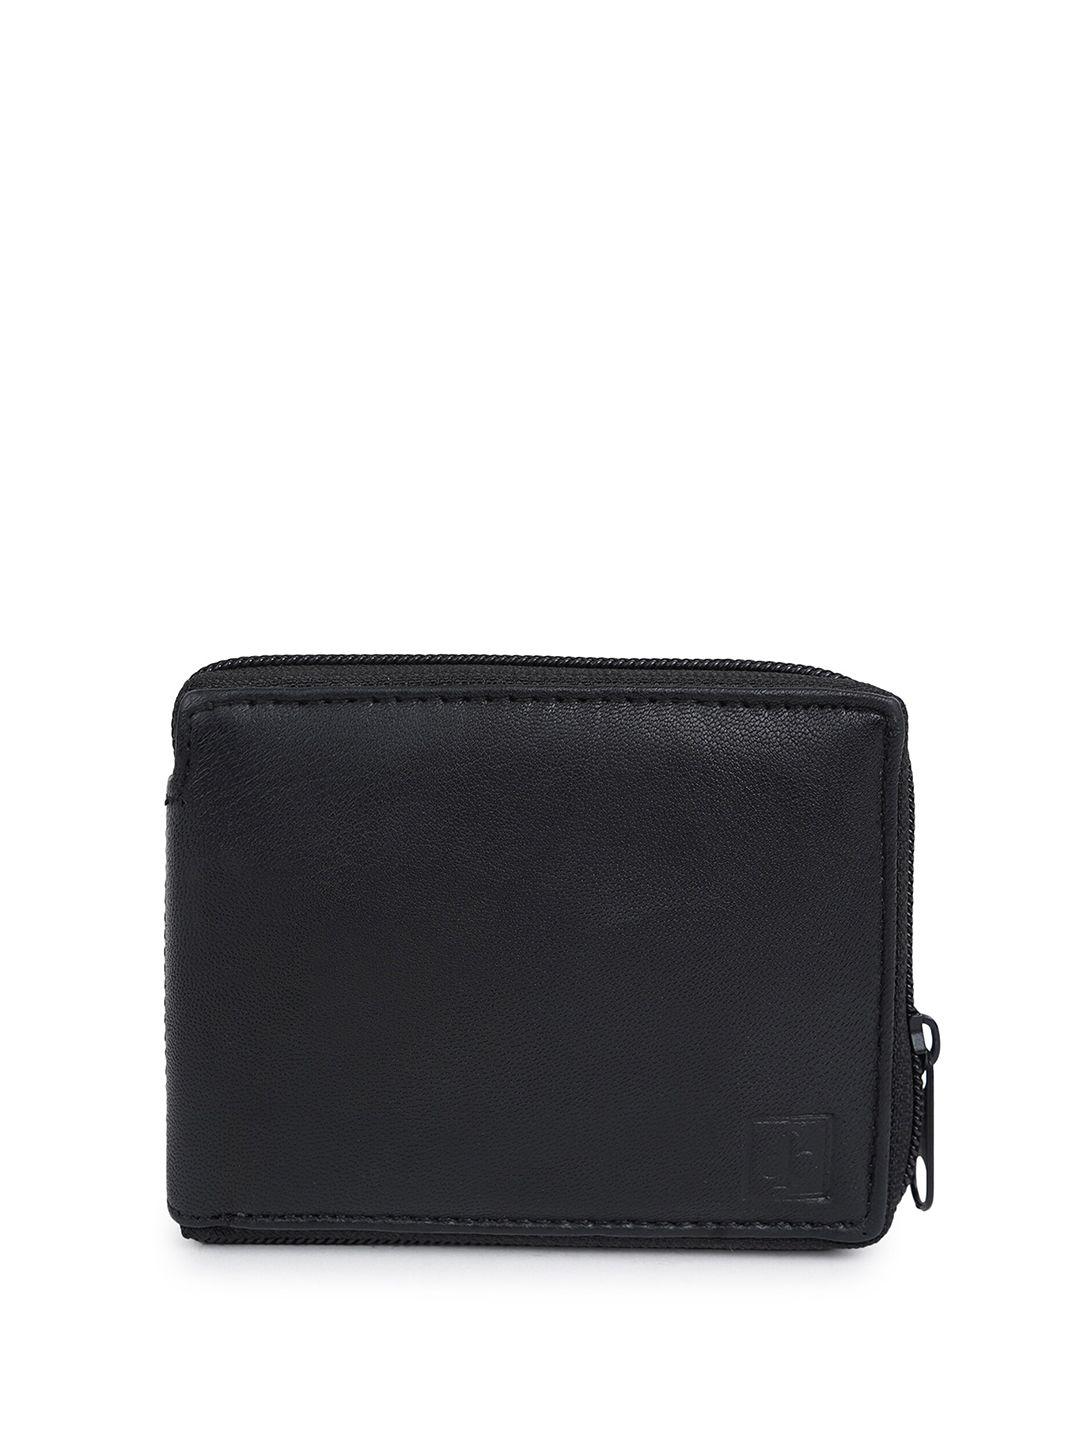 cimoni women leather zip around wallet